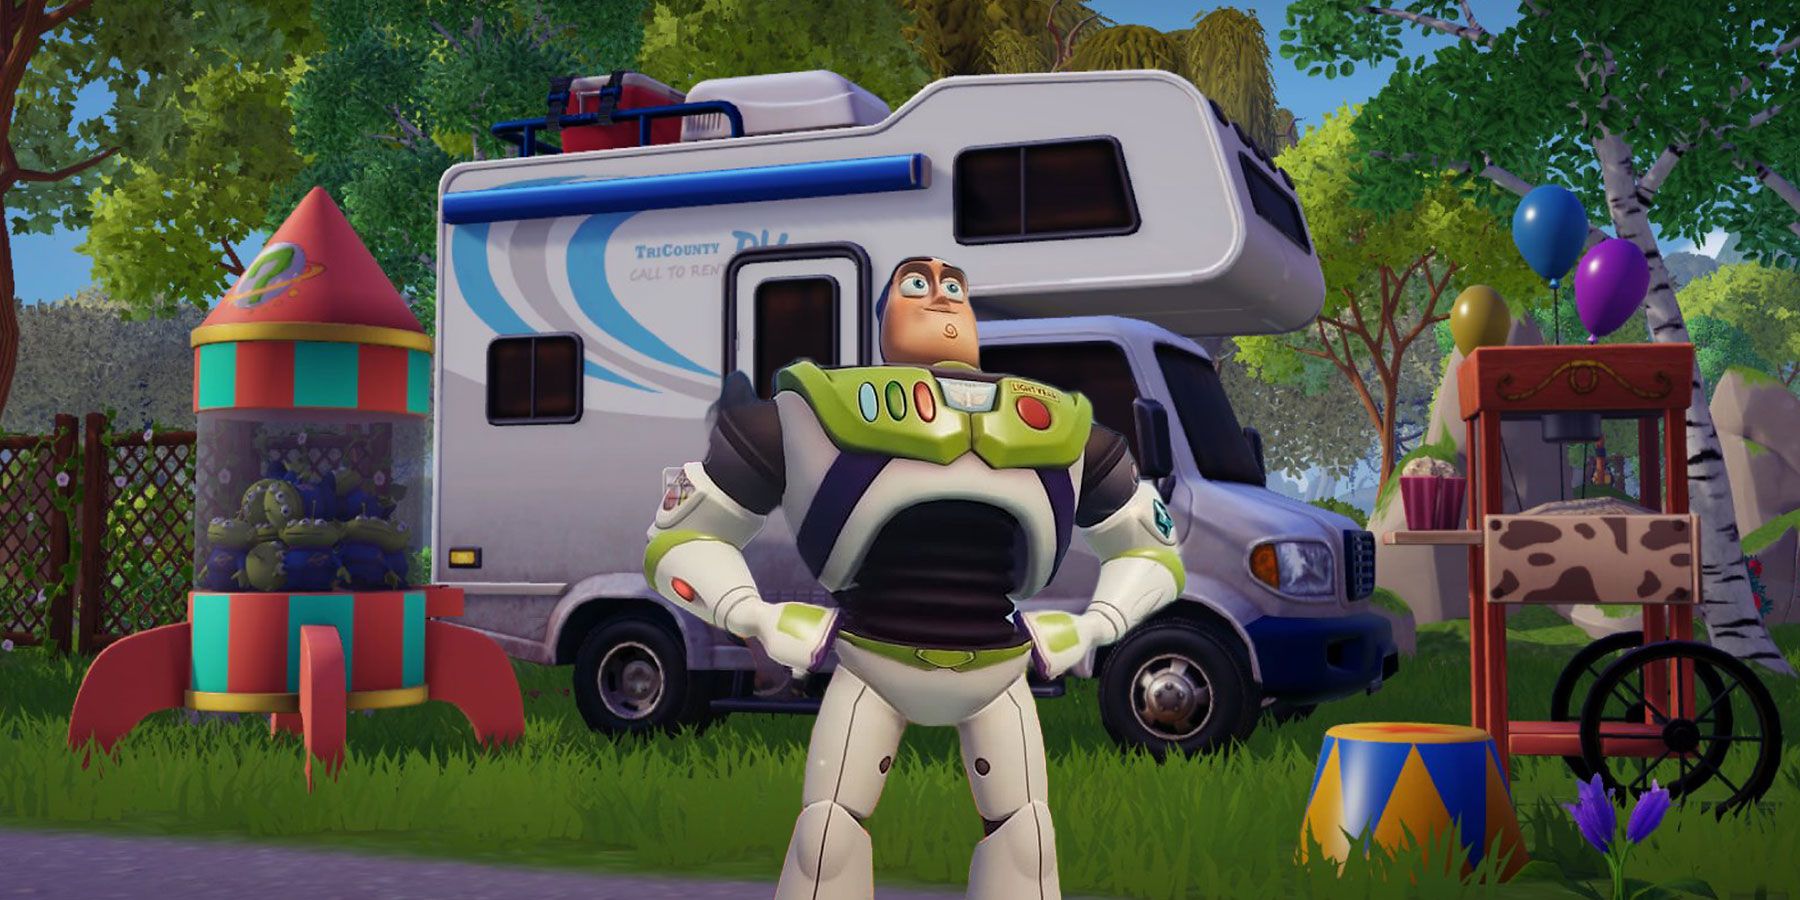 Buzz Lightyear in front of a camper van in Disney Dreamlight Valley